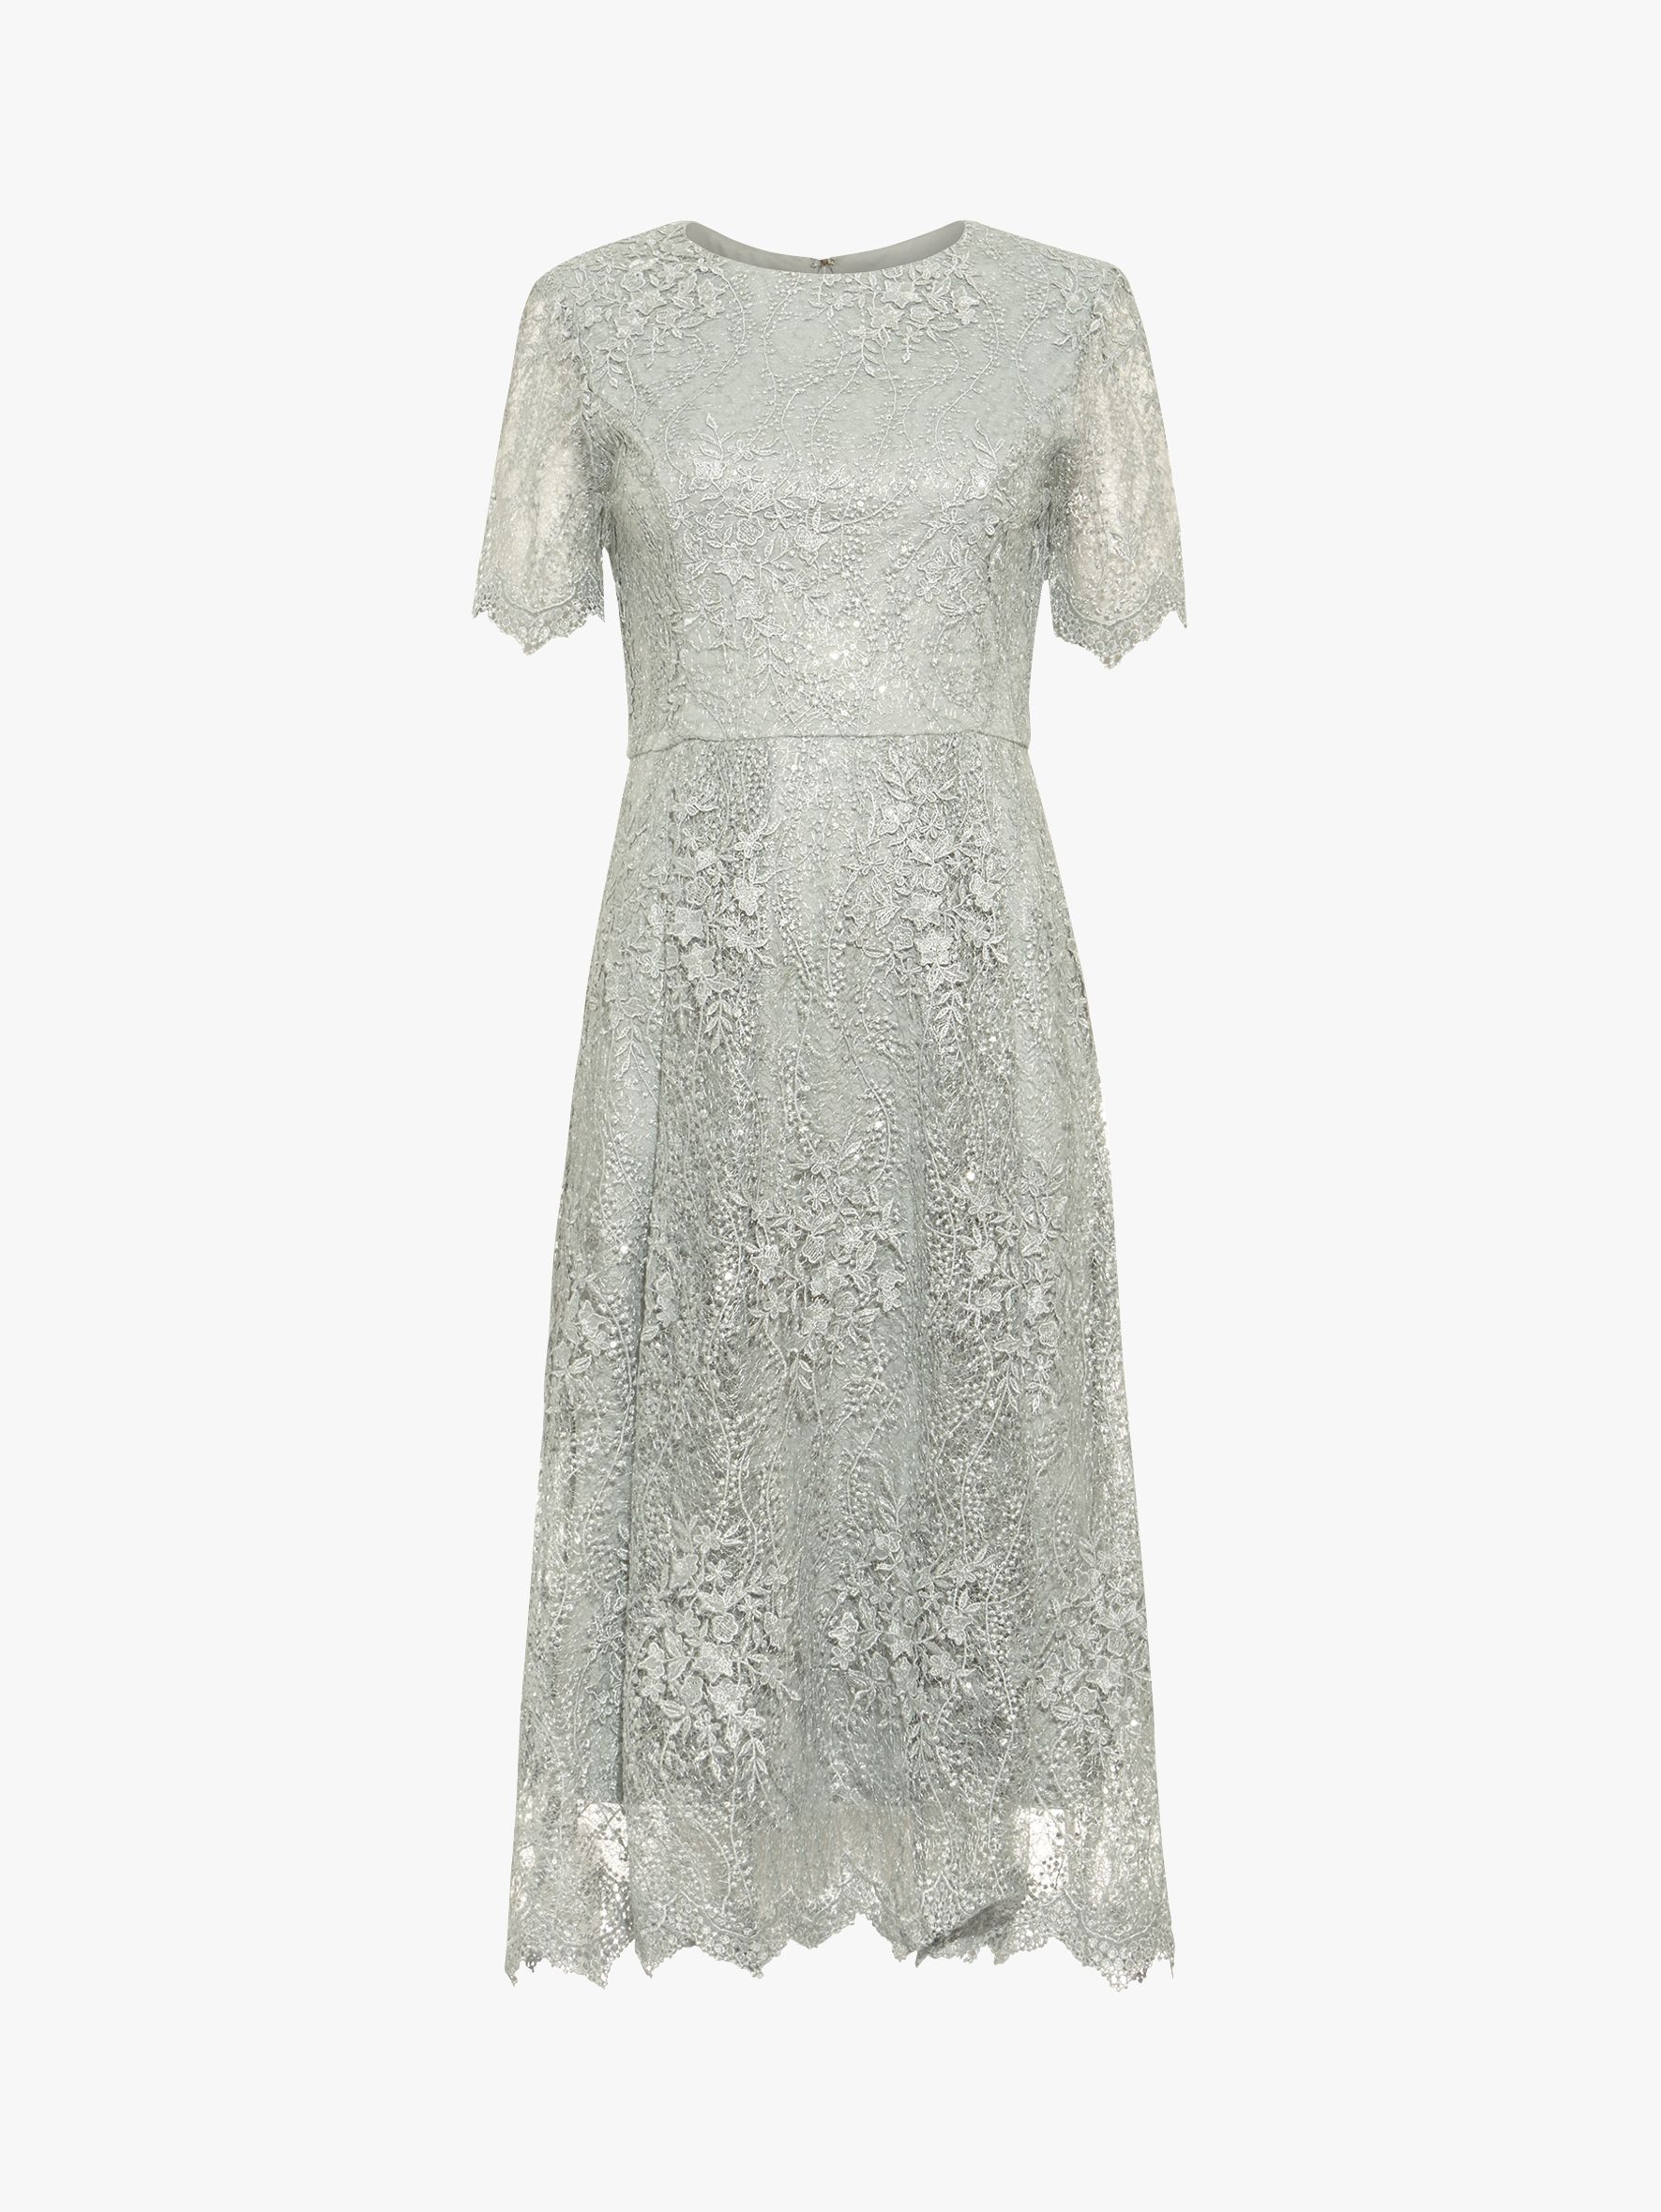 Phase Eight Malia Sequin Lace Dress, Petal, 12